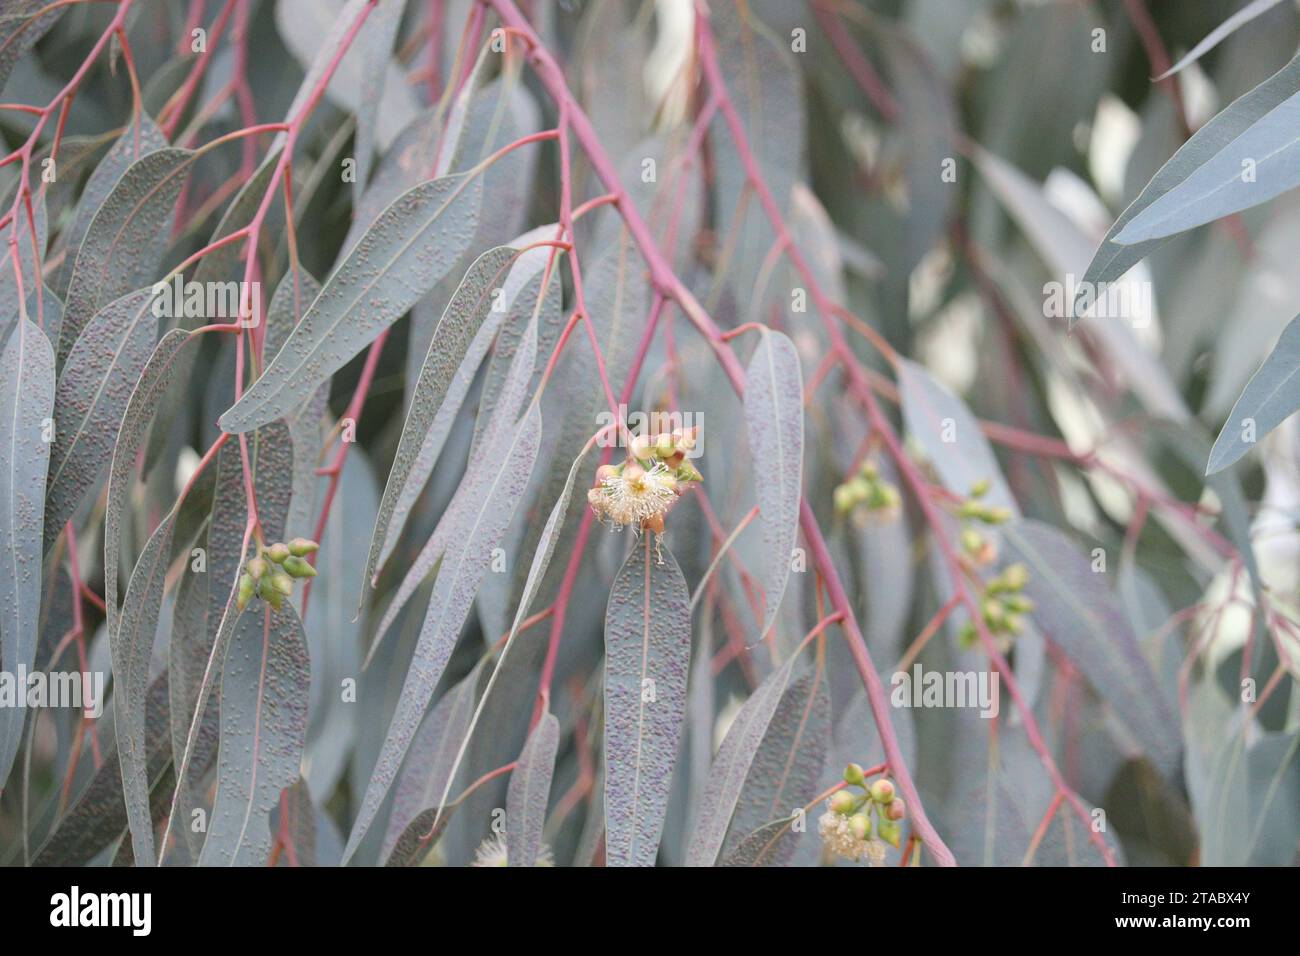 Buds, capsules, flowers and foliage of eucalyptus tree Stock Photo